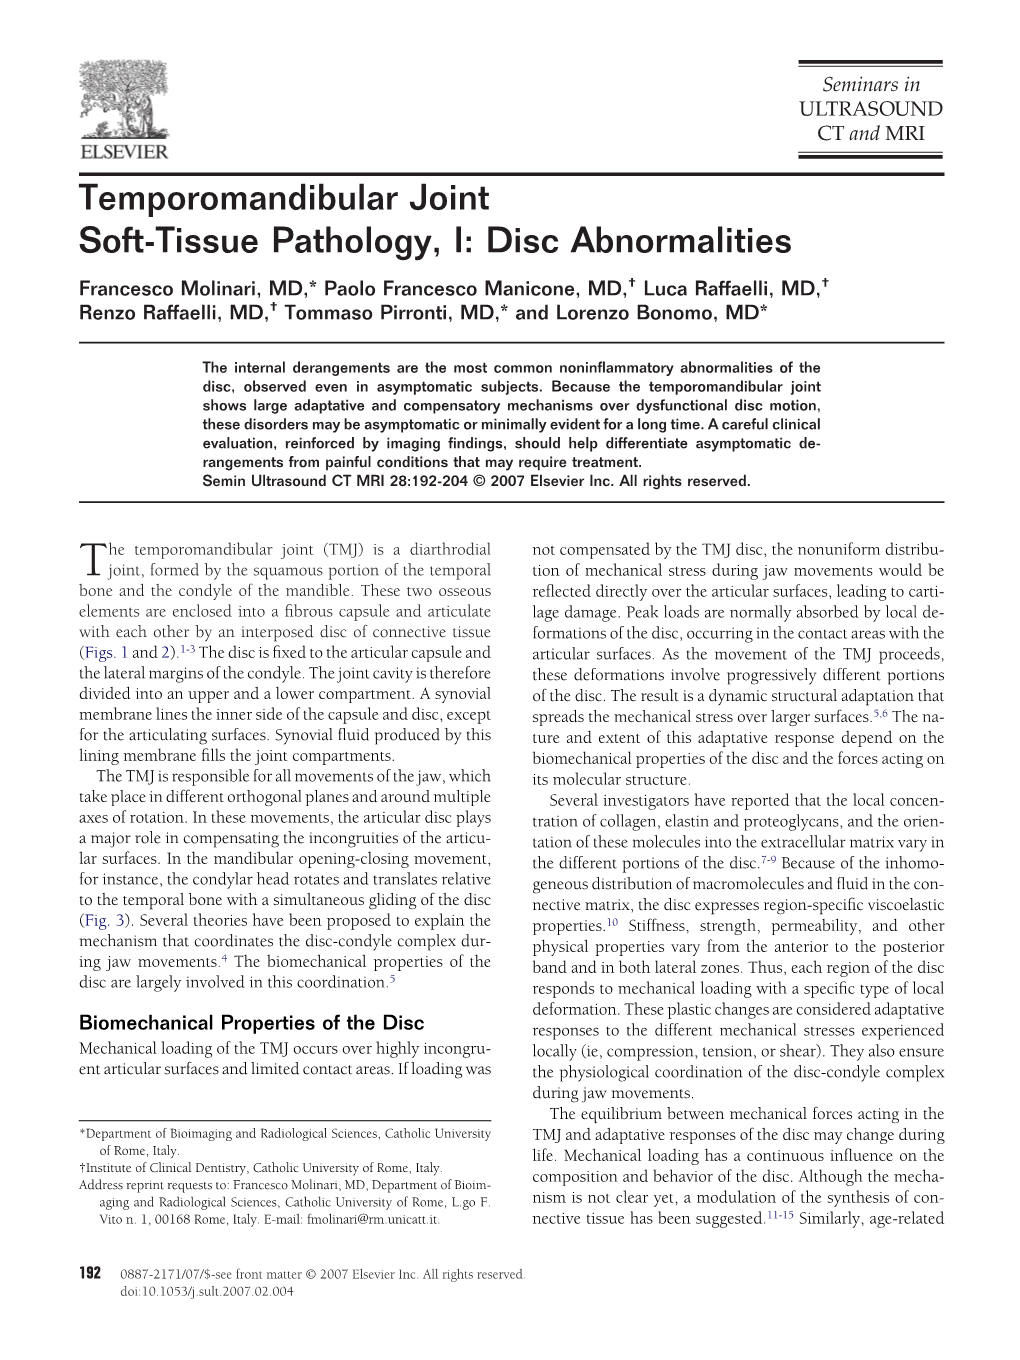 Temporomandibular Joint Soft-Tissue Pathology, I: Disc Abnormalities